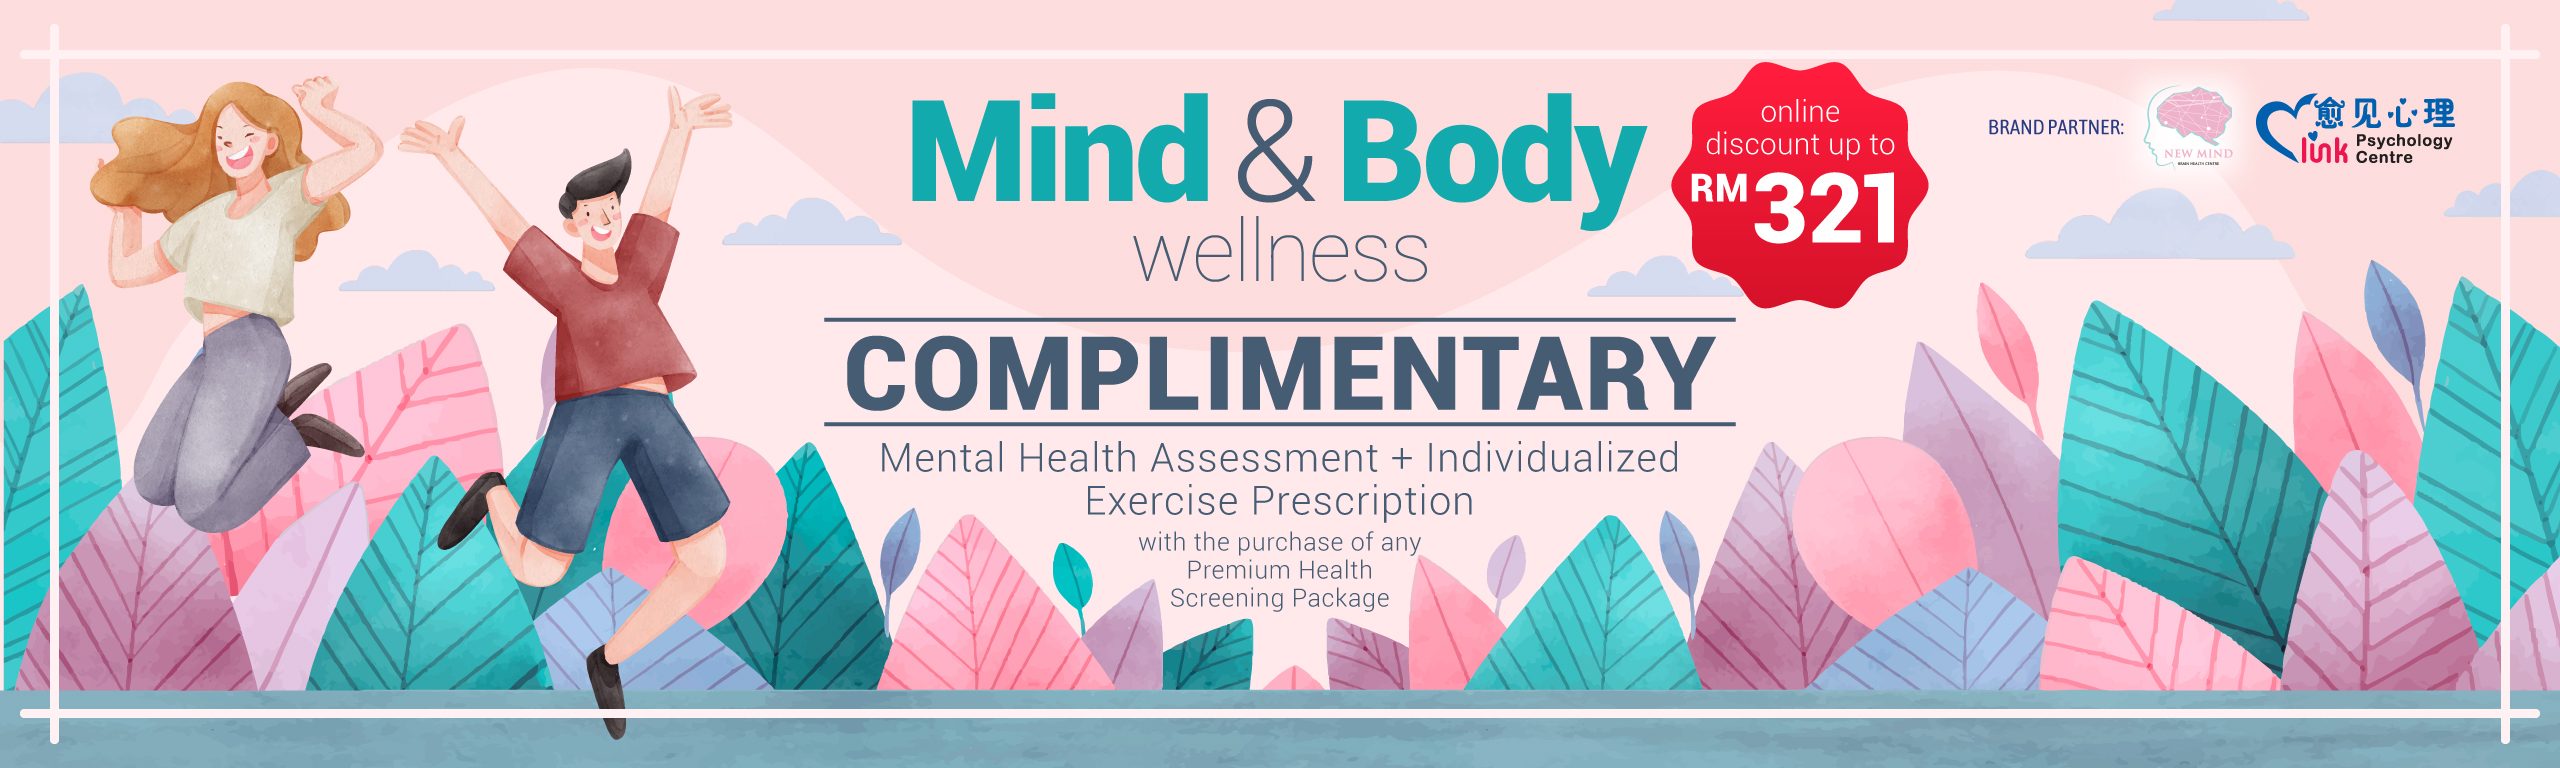 mind and body wellness